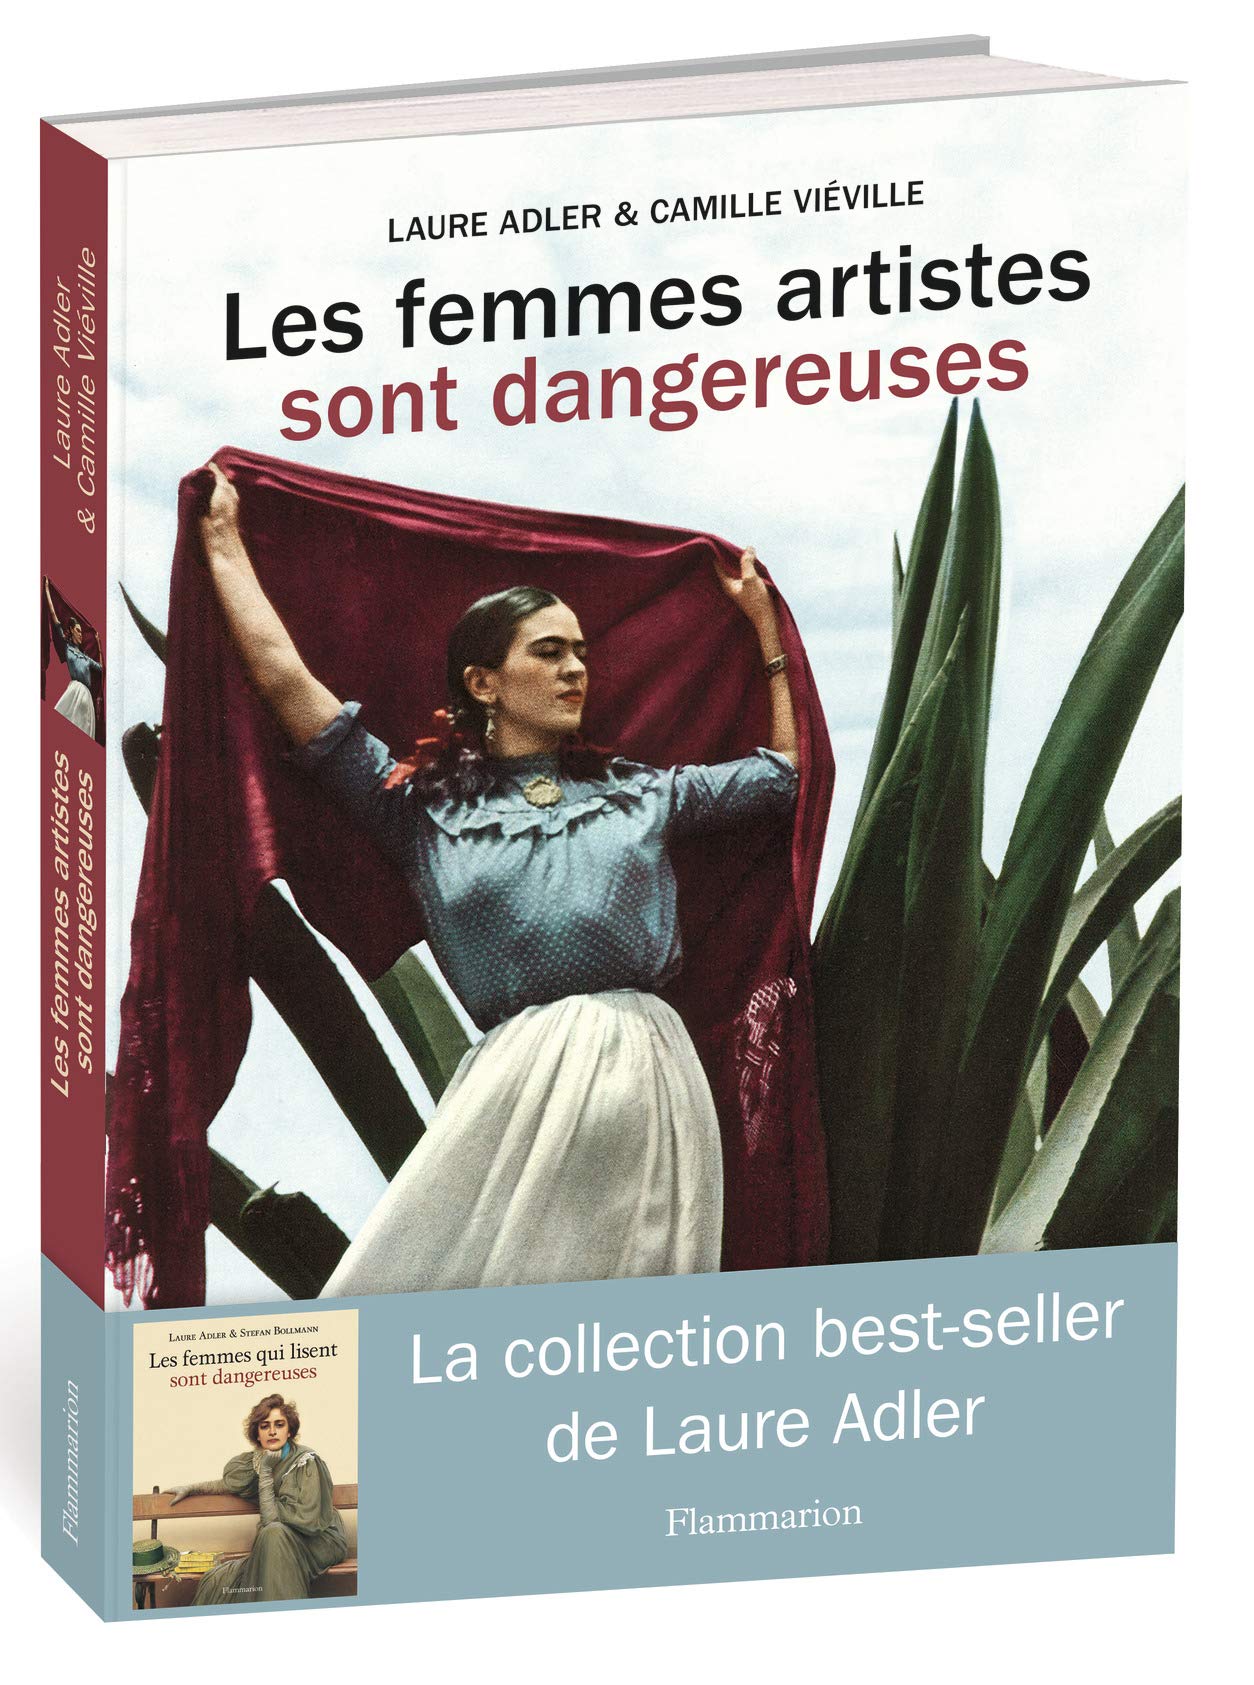 Les femmes artistes sont dangereuses | Laure Adler, Camille Vieville